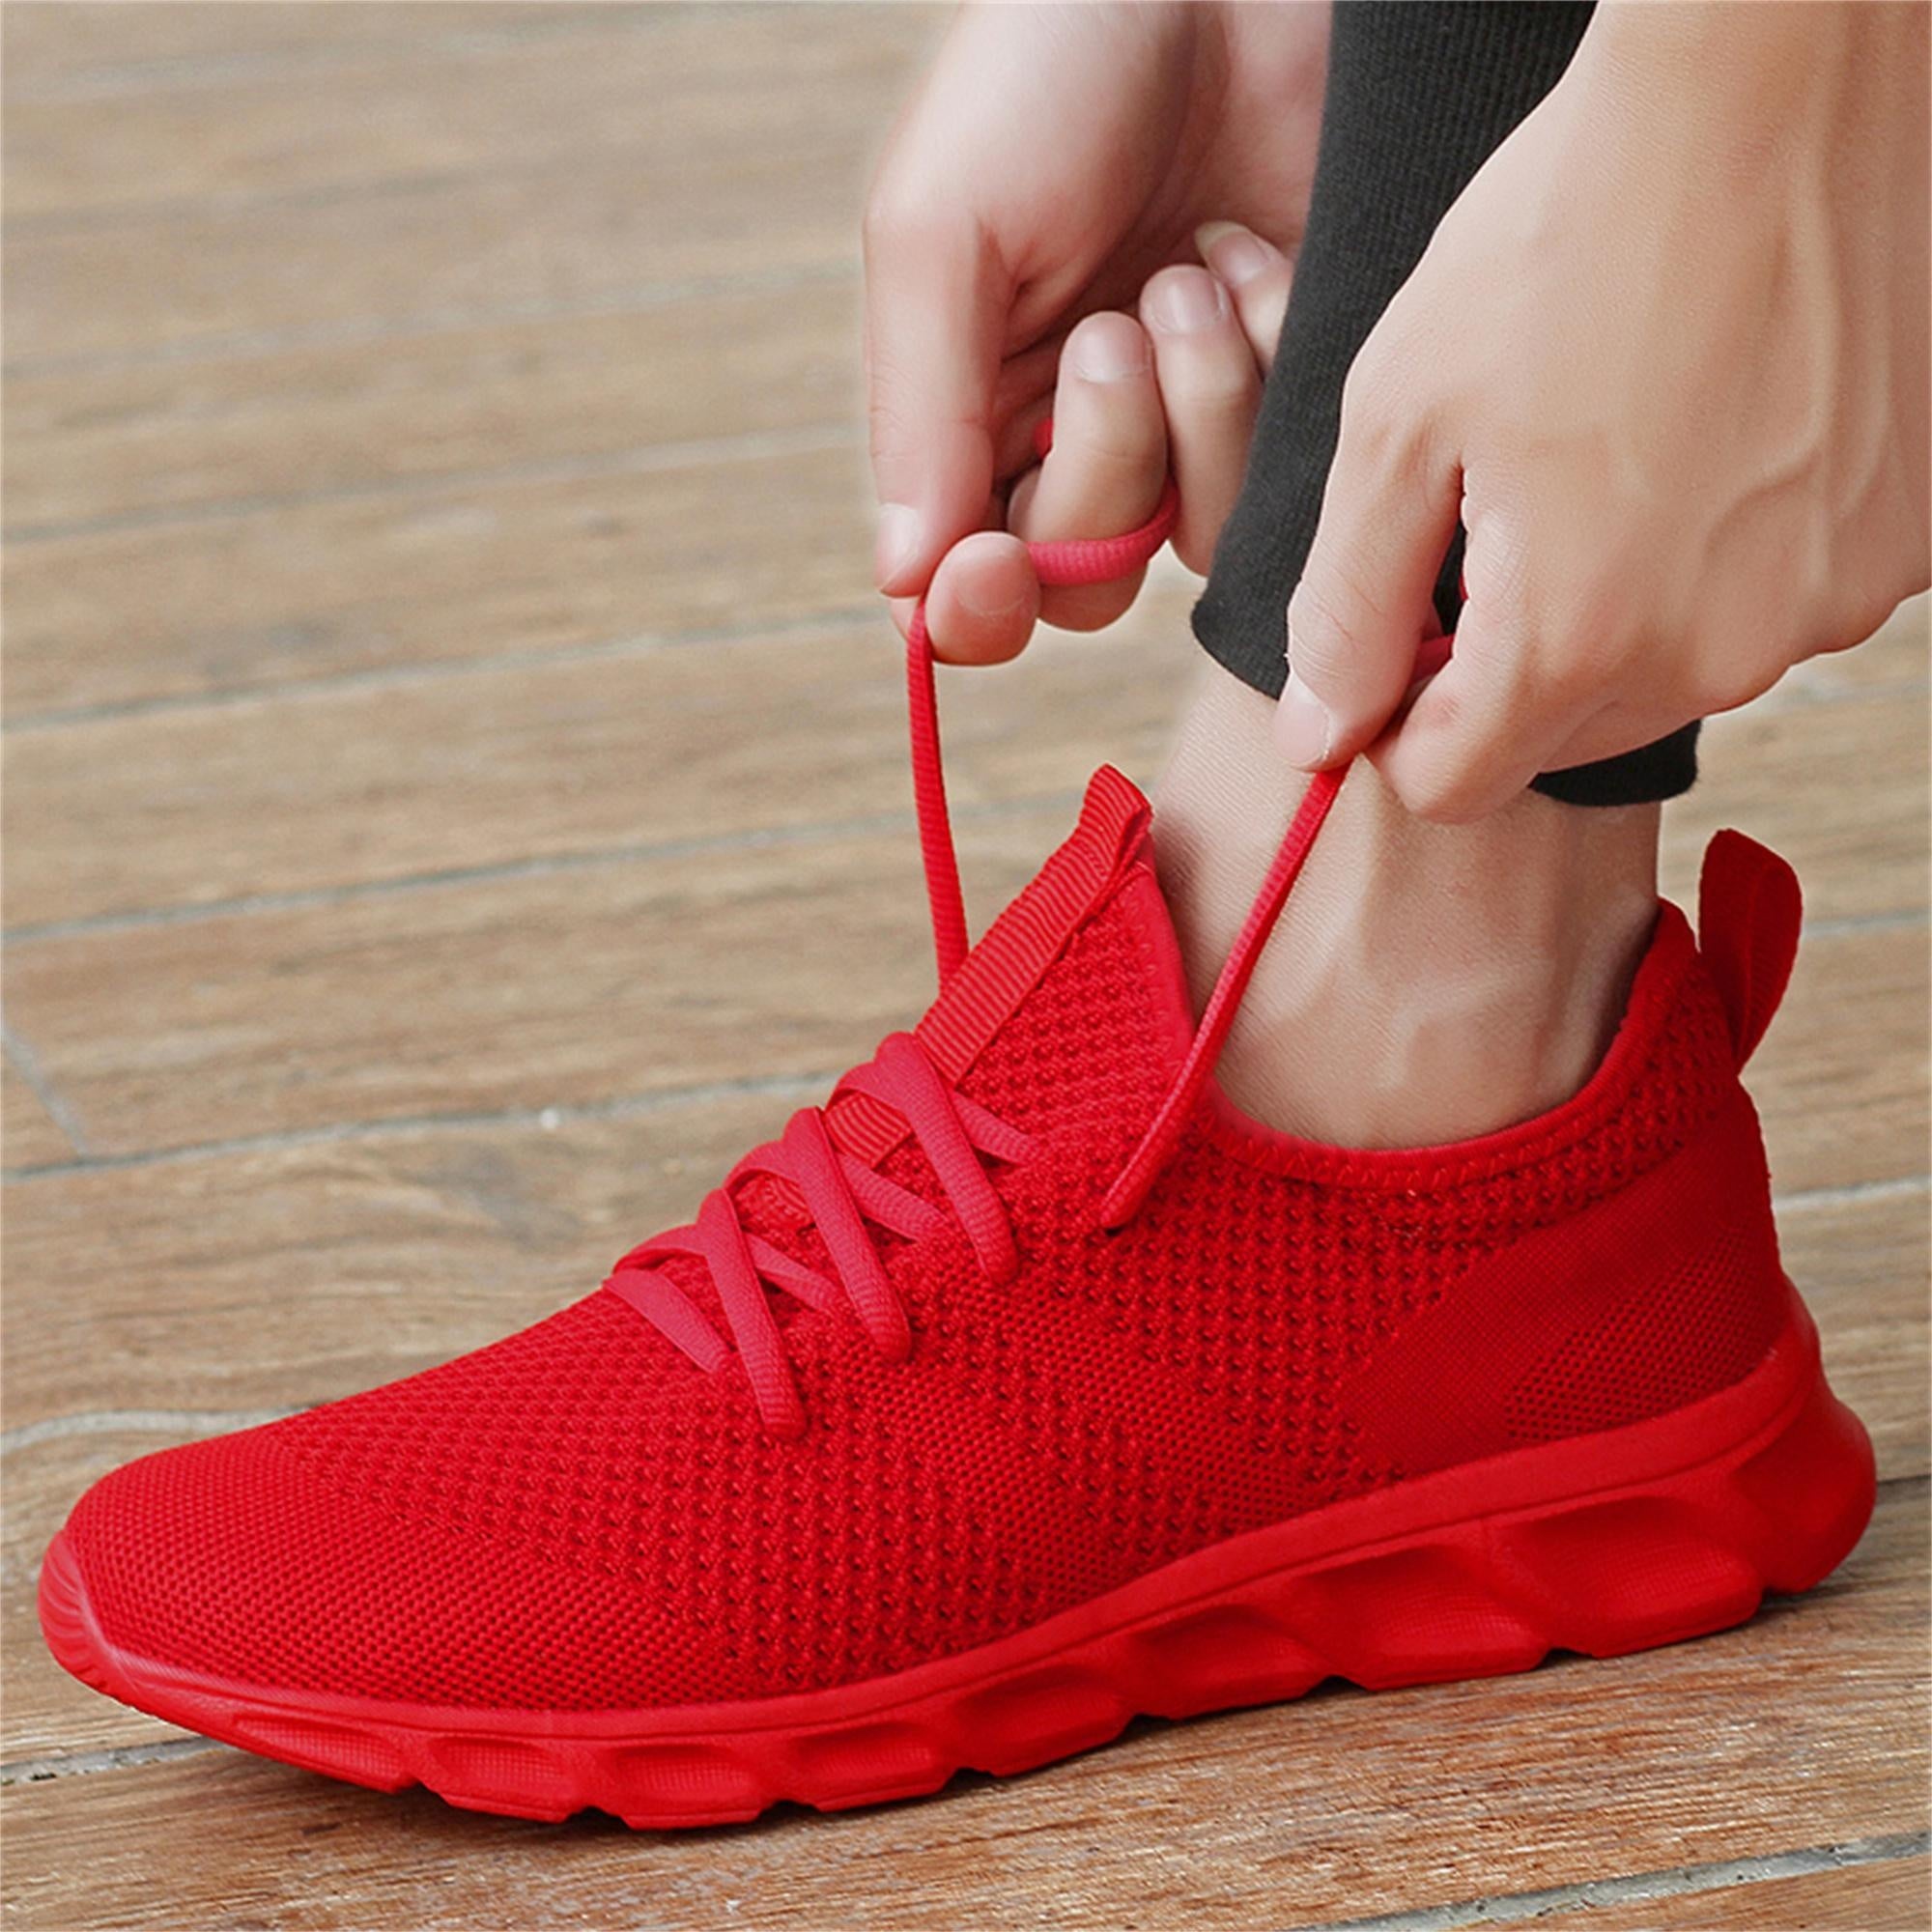 Damyuan Men Athletic Sneakers Lightweight Sport Running Shoes Comfort Casual Walking Tennis Shoes